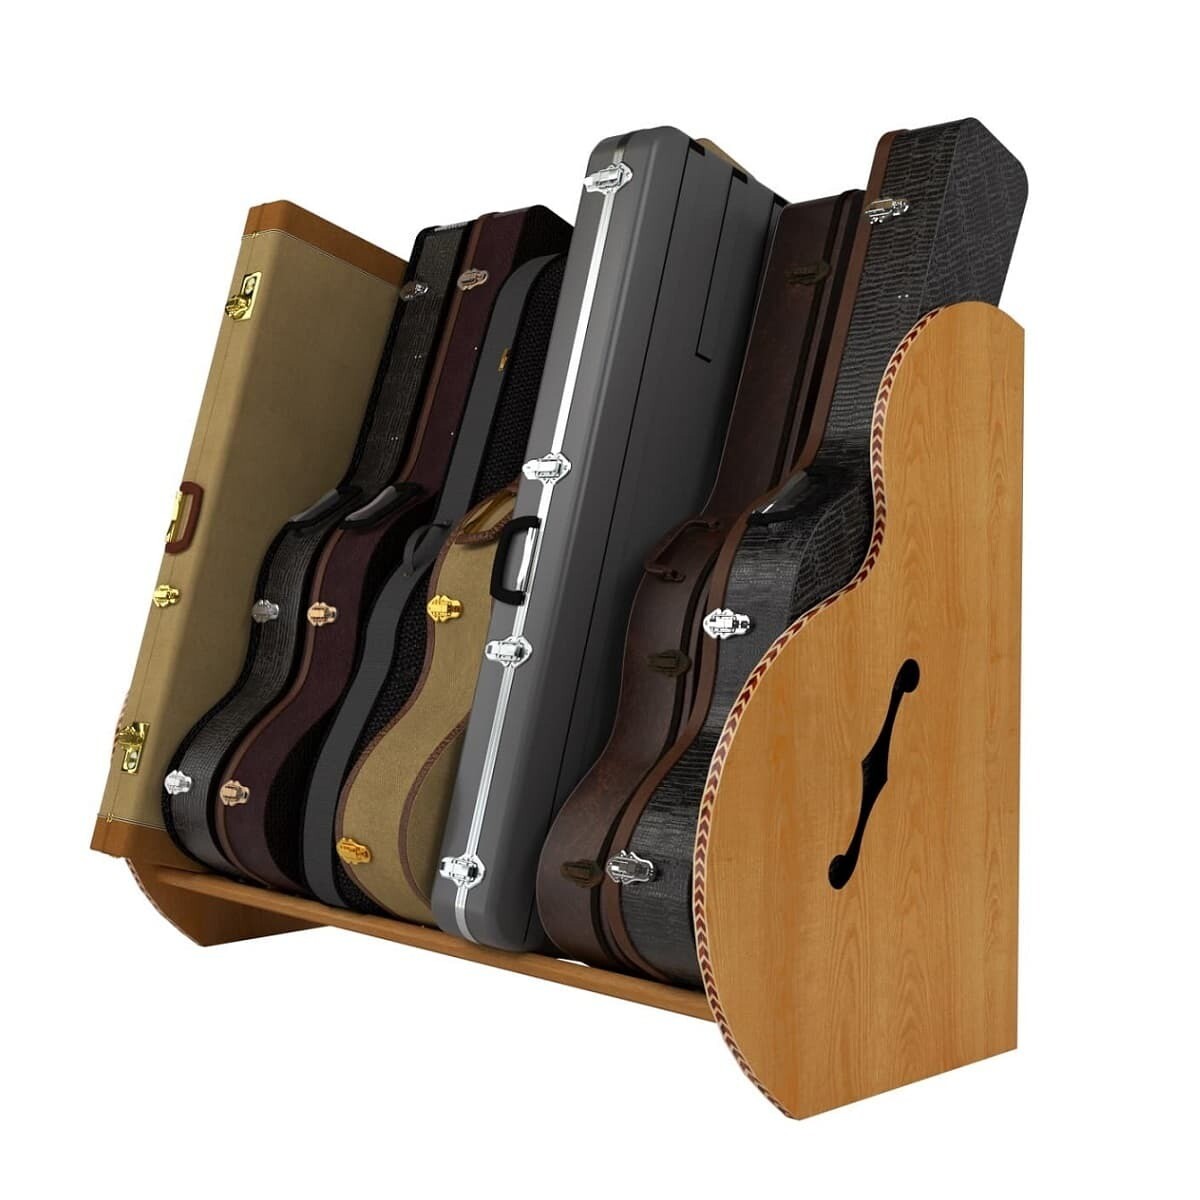 The Studio™ Deluxe Guitar Case Storage Rack (7-9 cases) - Red Oak